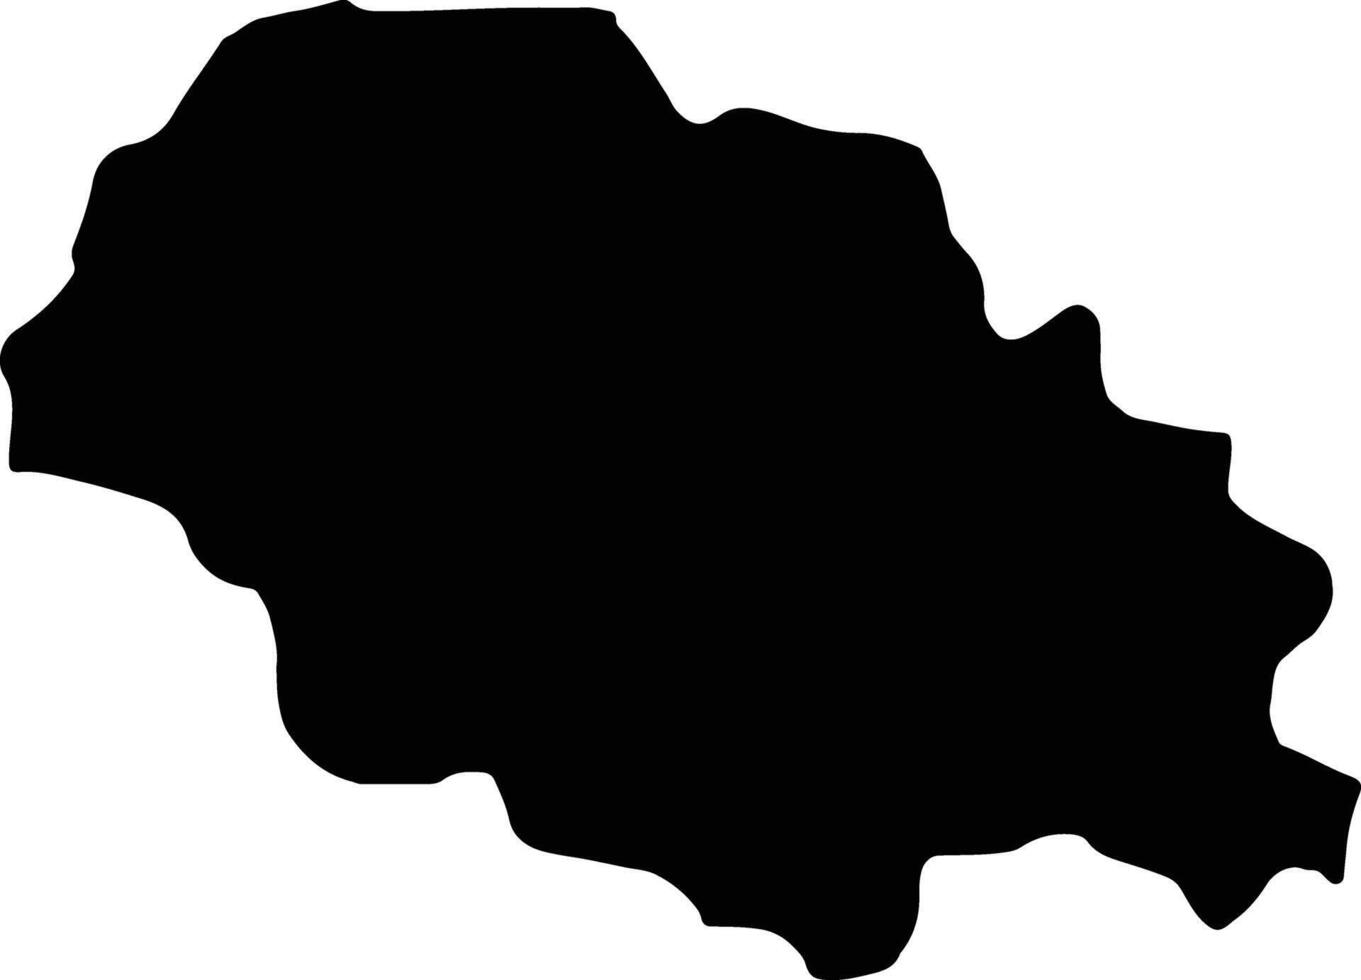 Caska Macedonia silhouette map vector